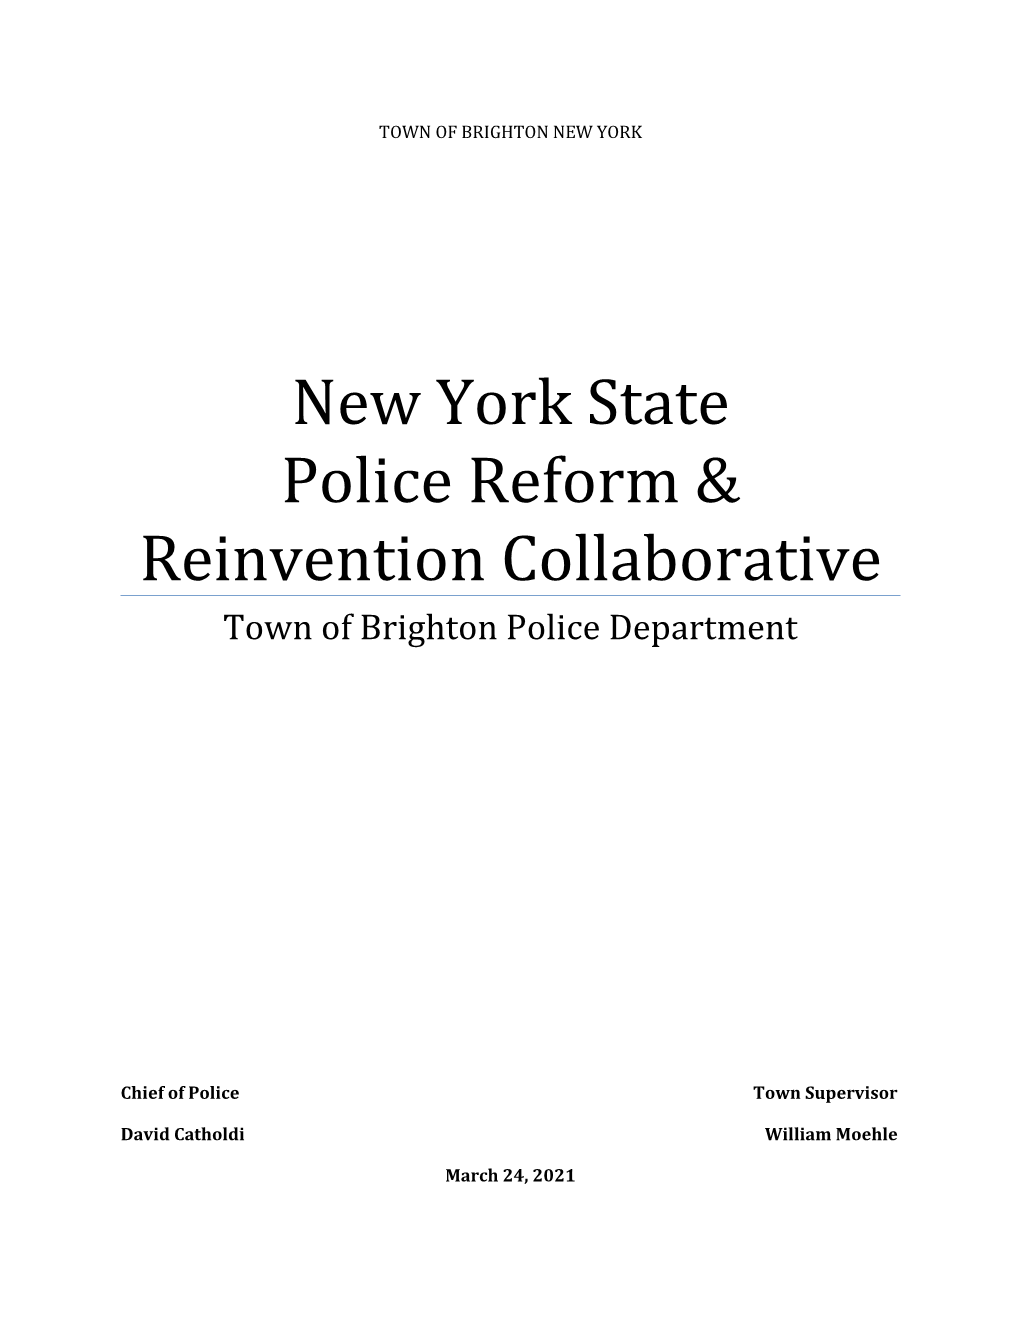 New York State Police Reform & Reinvention Collaborative